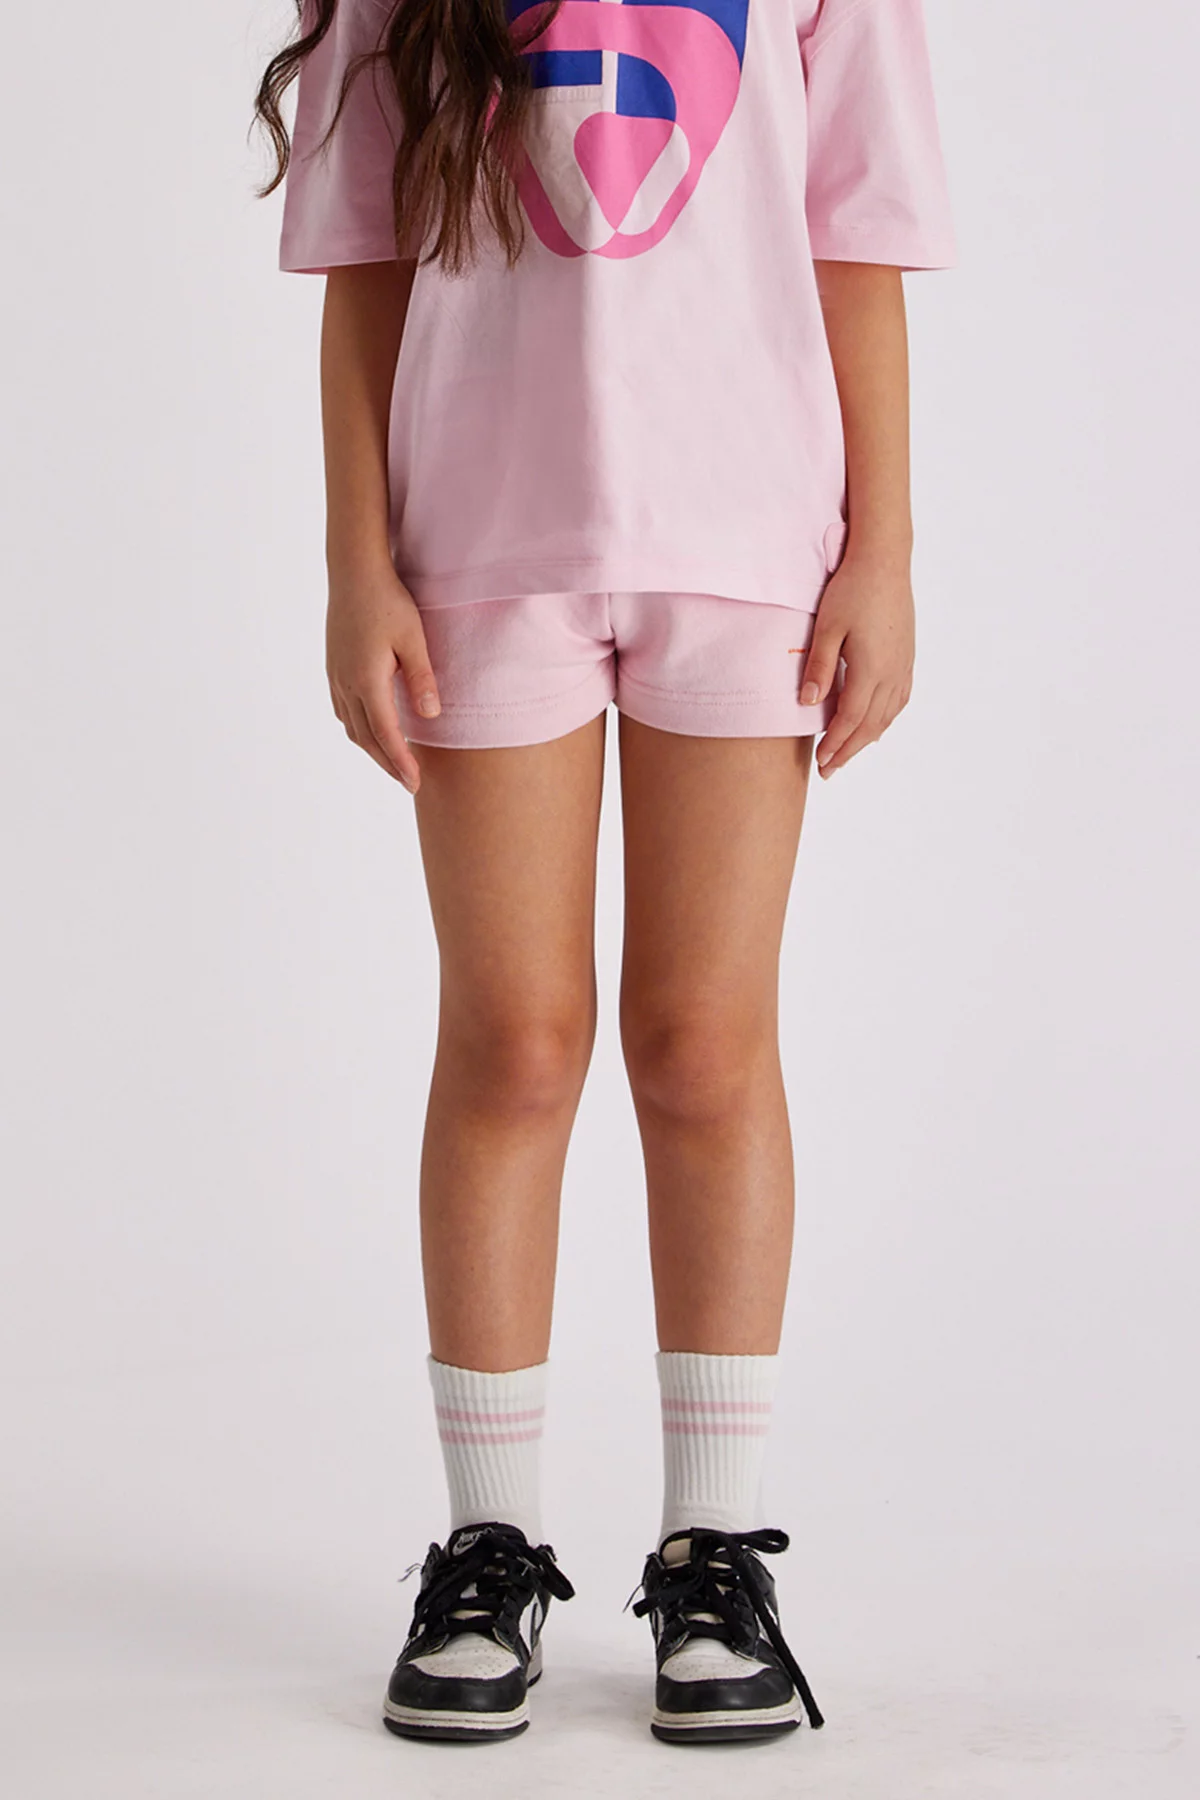 Shirt Isabelle Pink cotton short